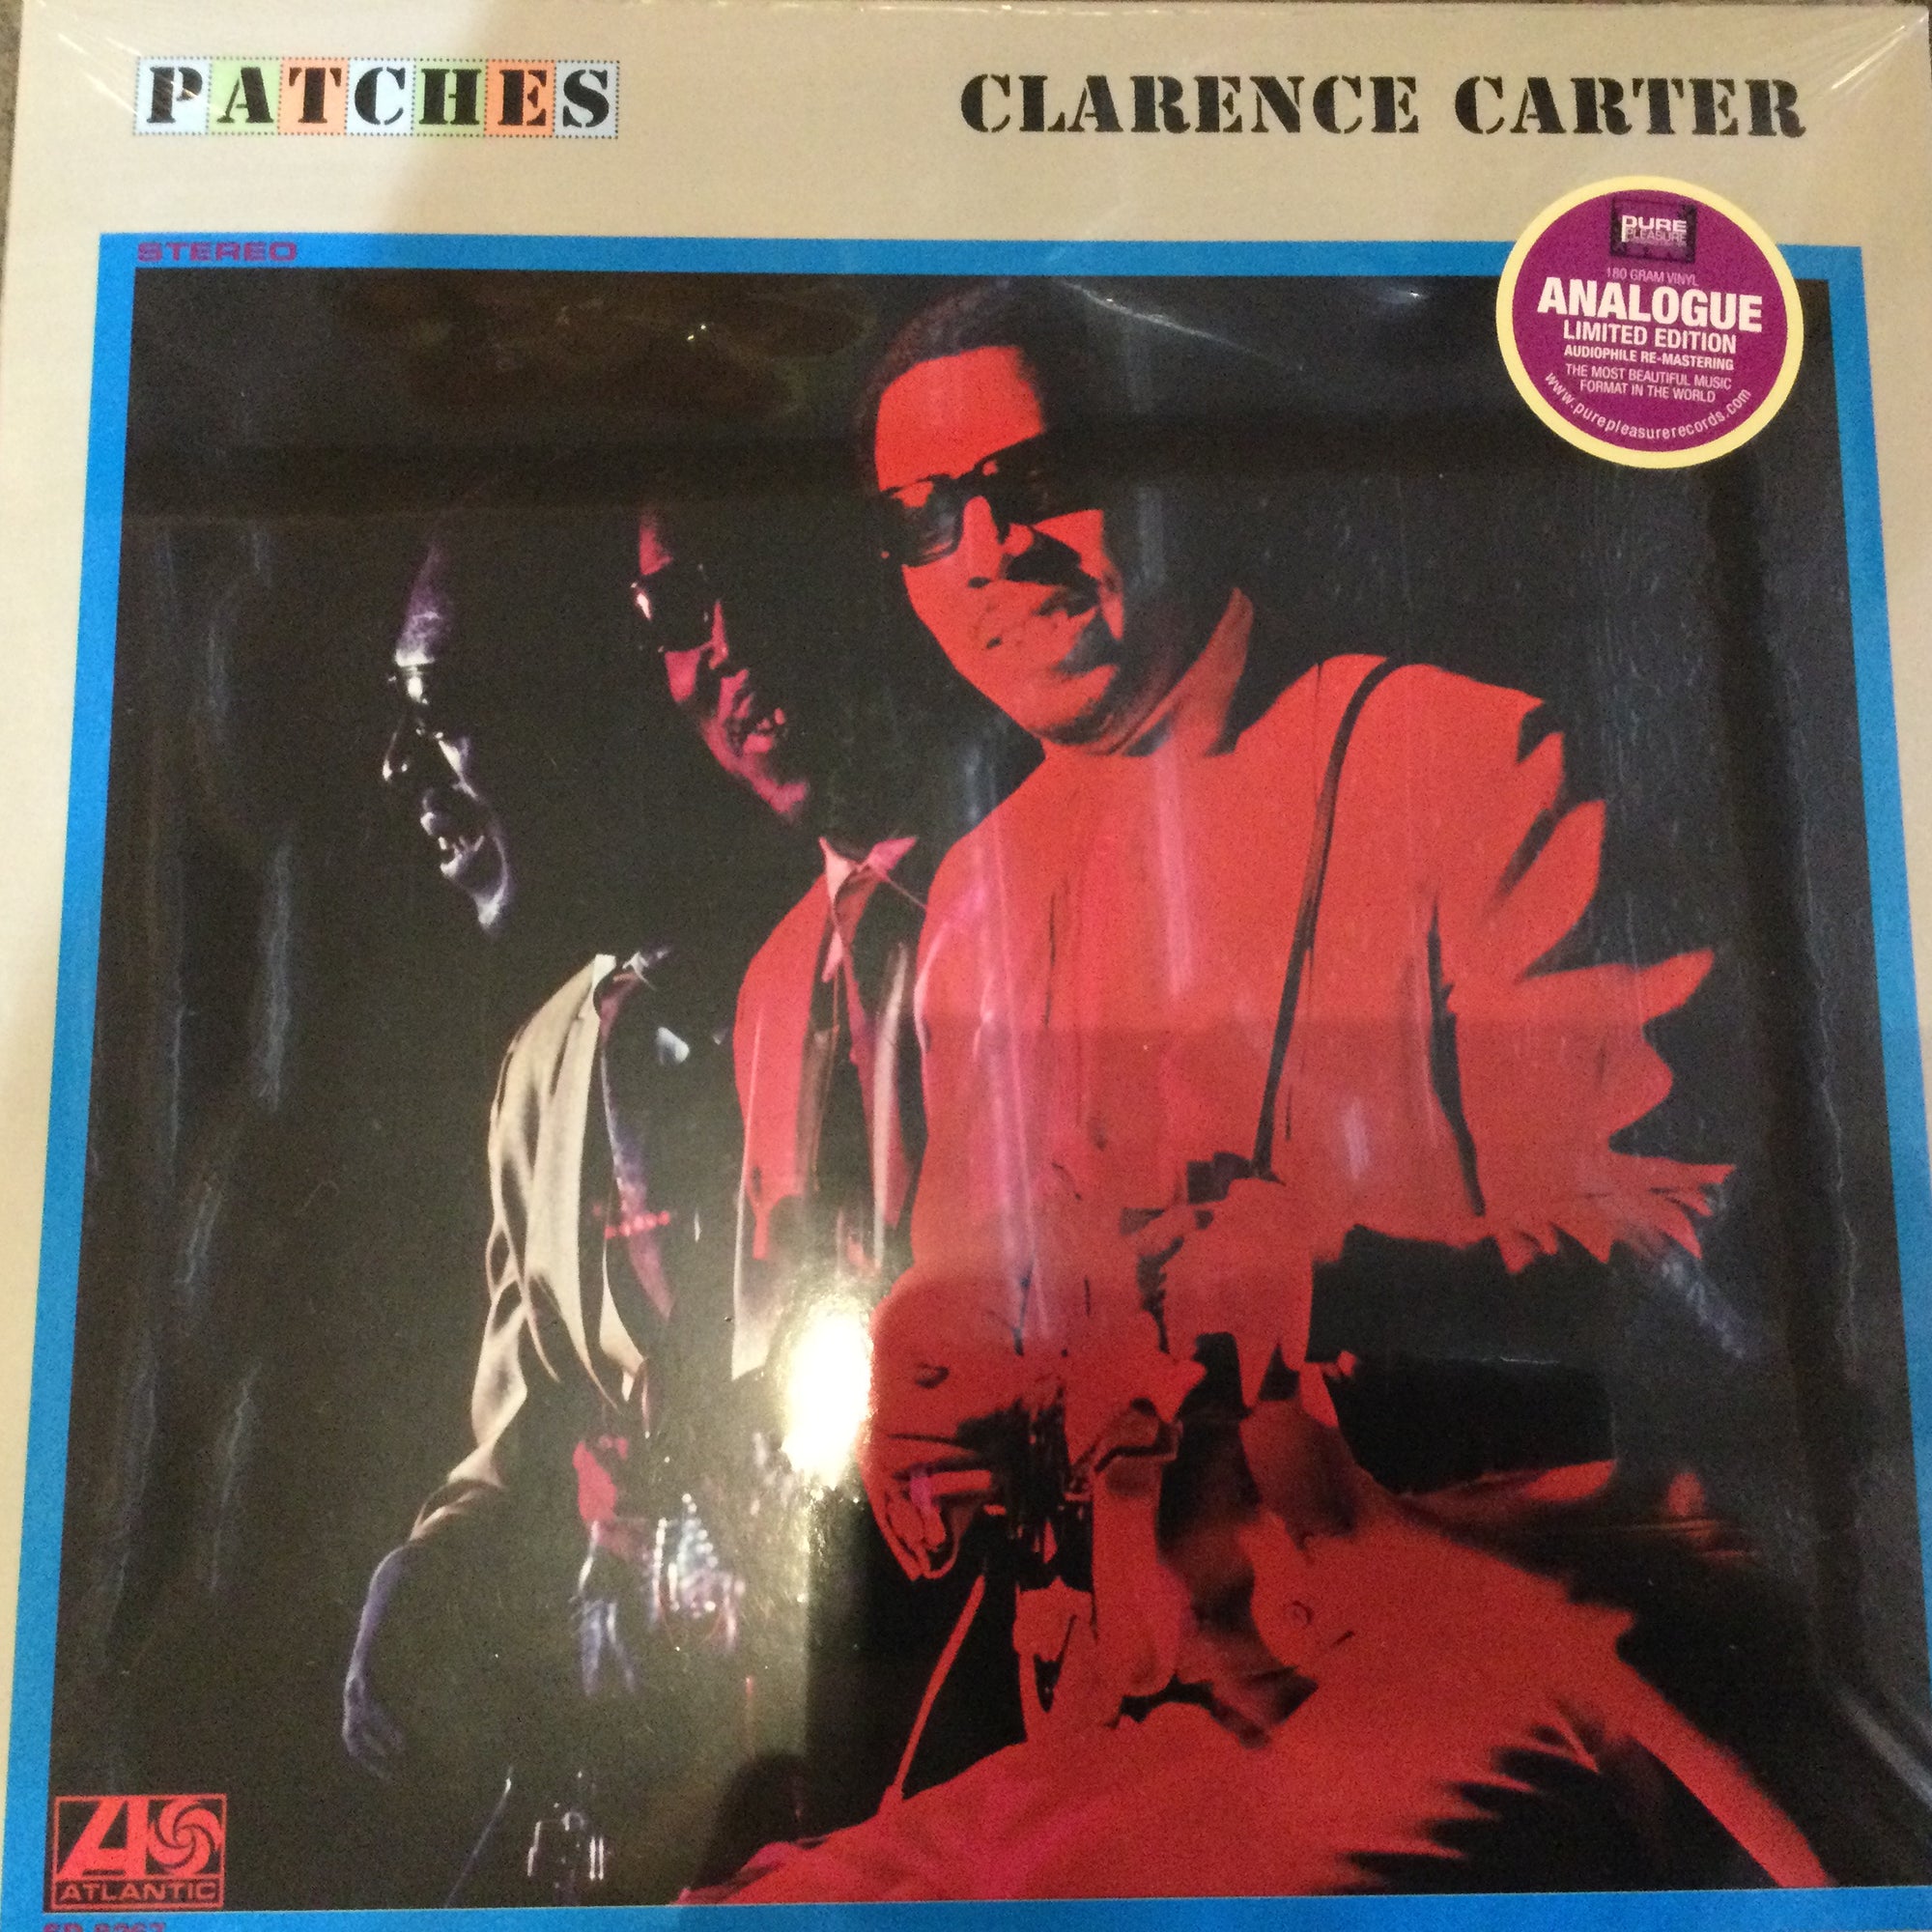 Clarence Carter - Patches (Vinyl LP)